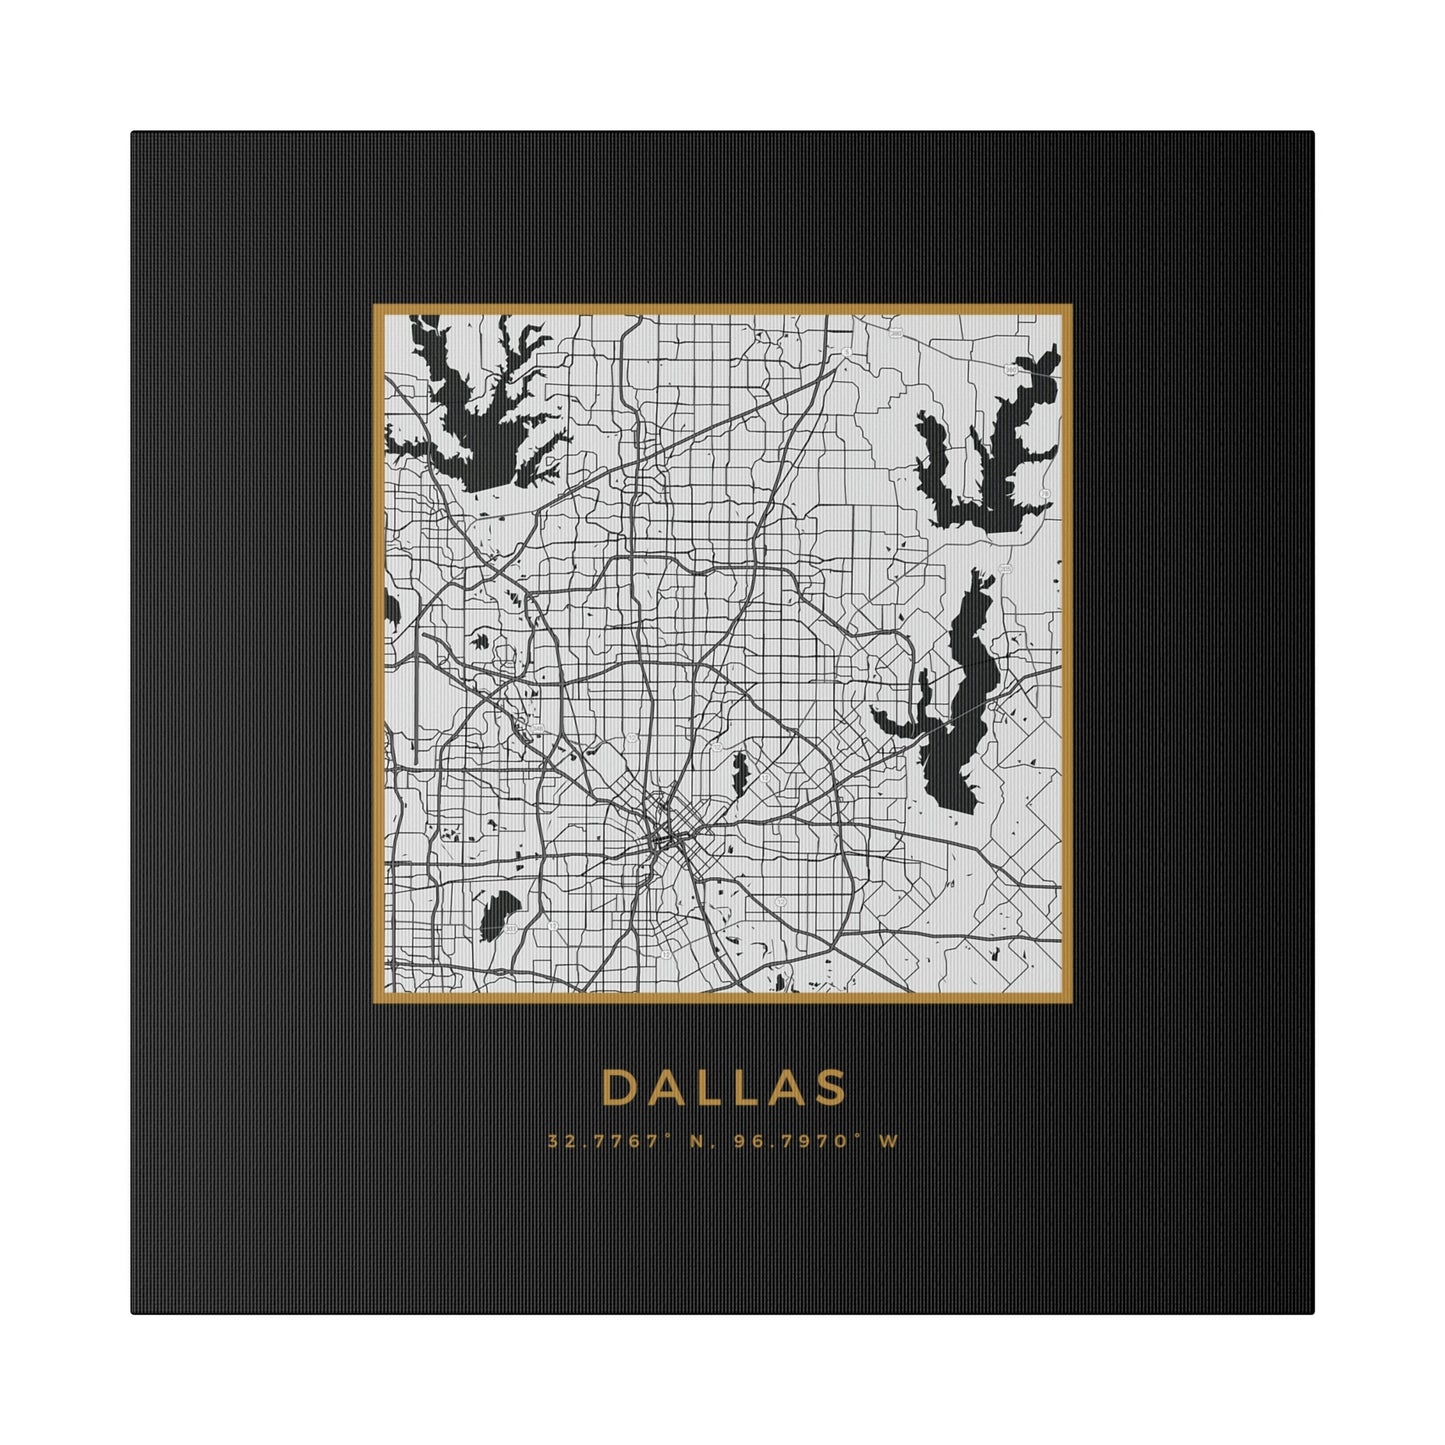 Dallas Hometown on Black Canvas (Golden Trim)